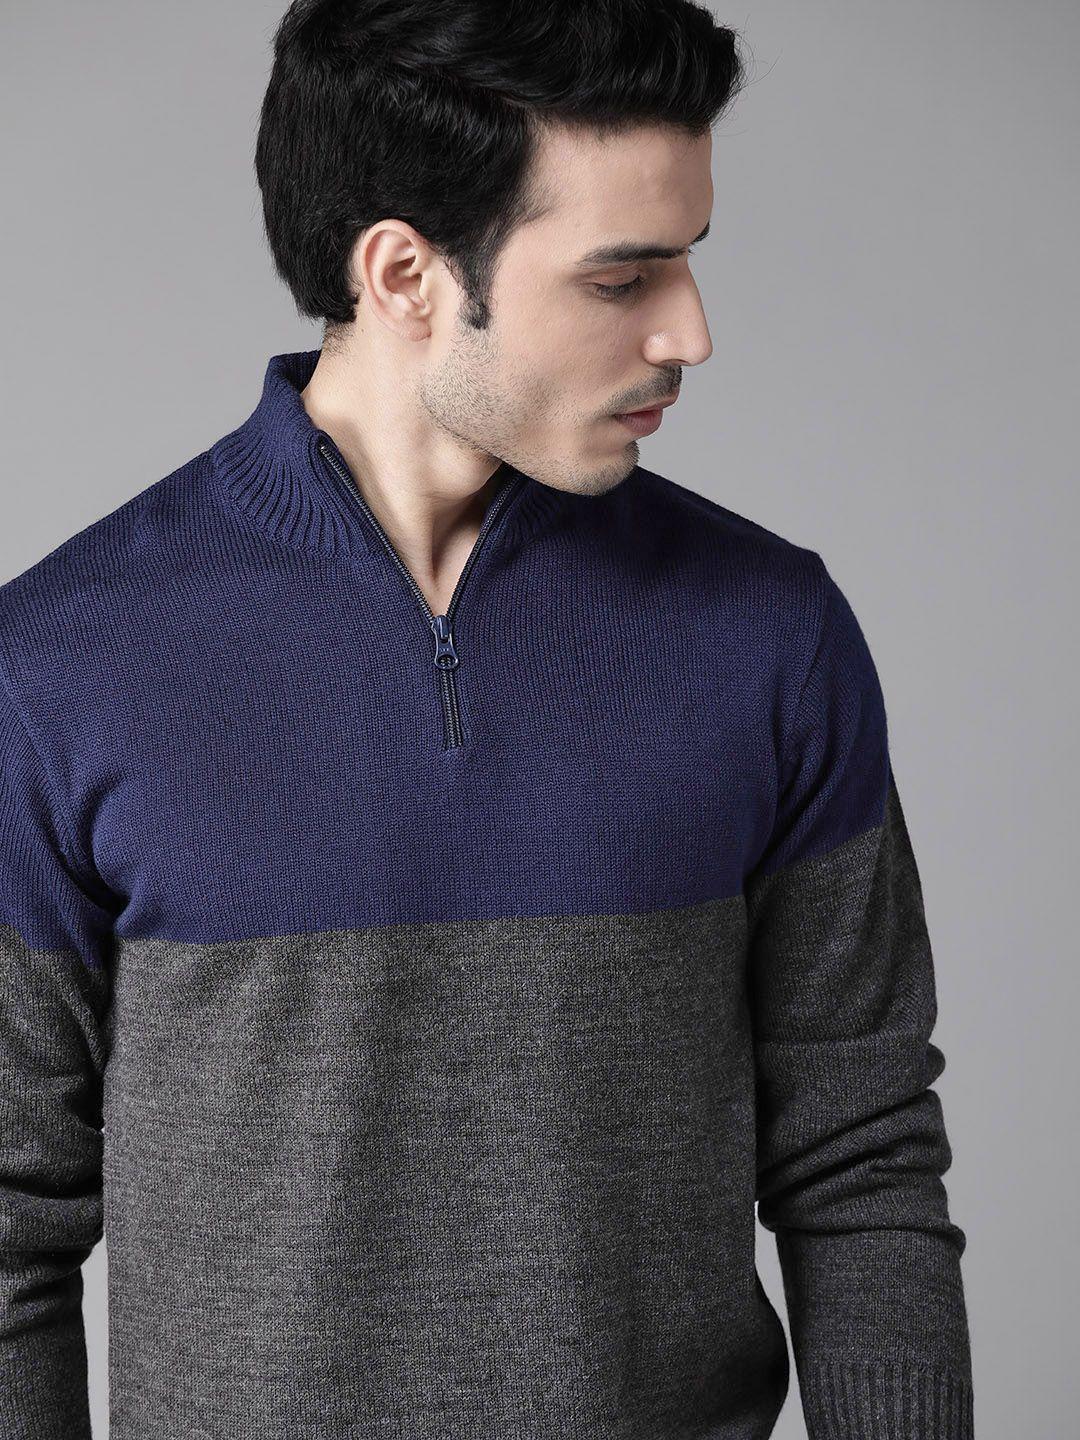 roadster-men-charcoal-grey-&-navy-blue-colourblocked-acrylic-sweater